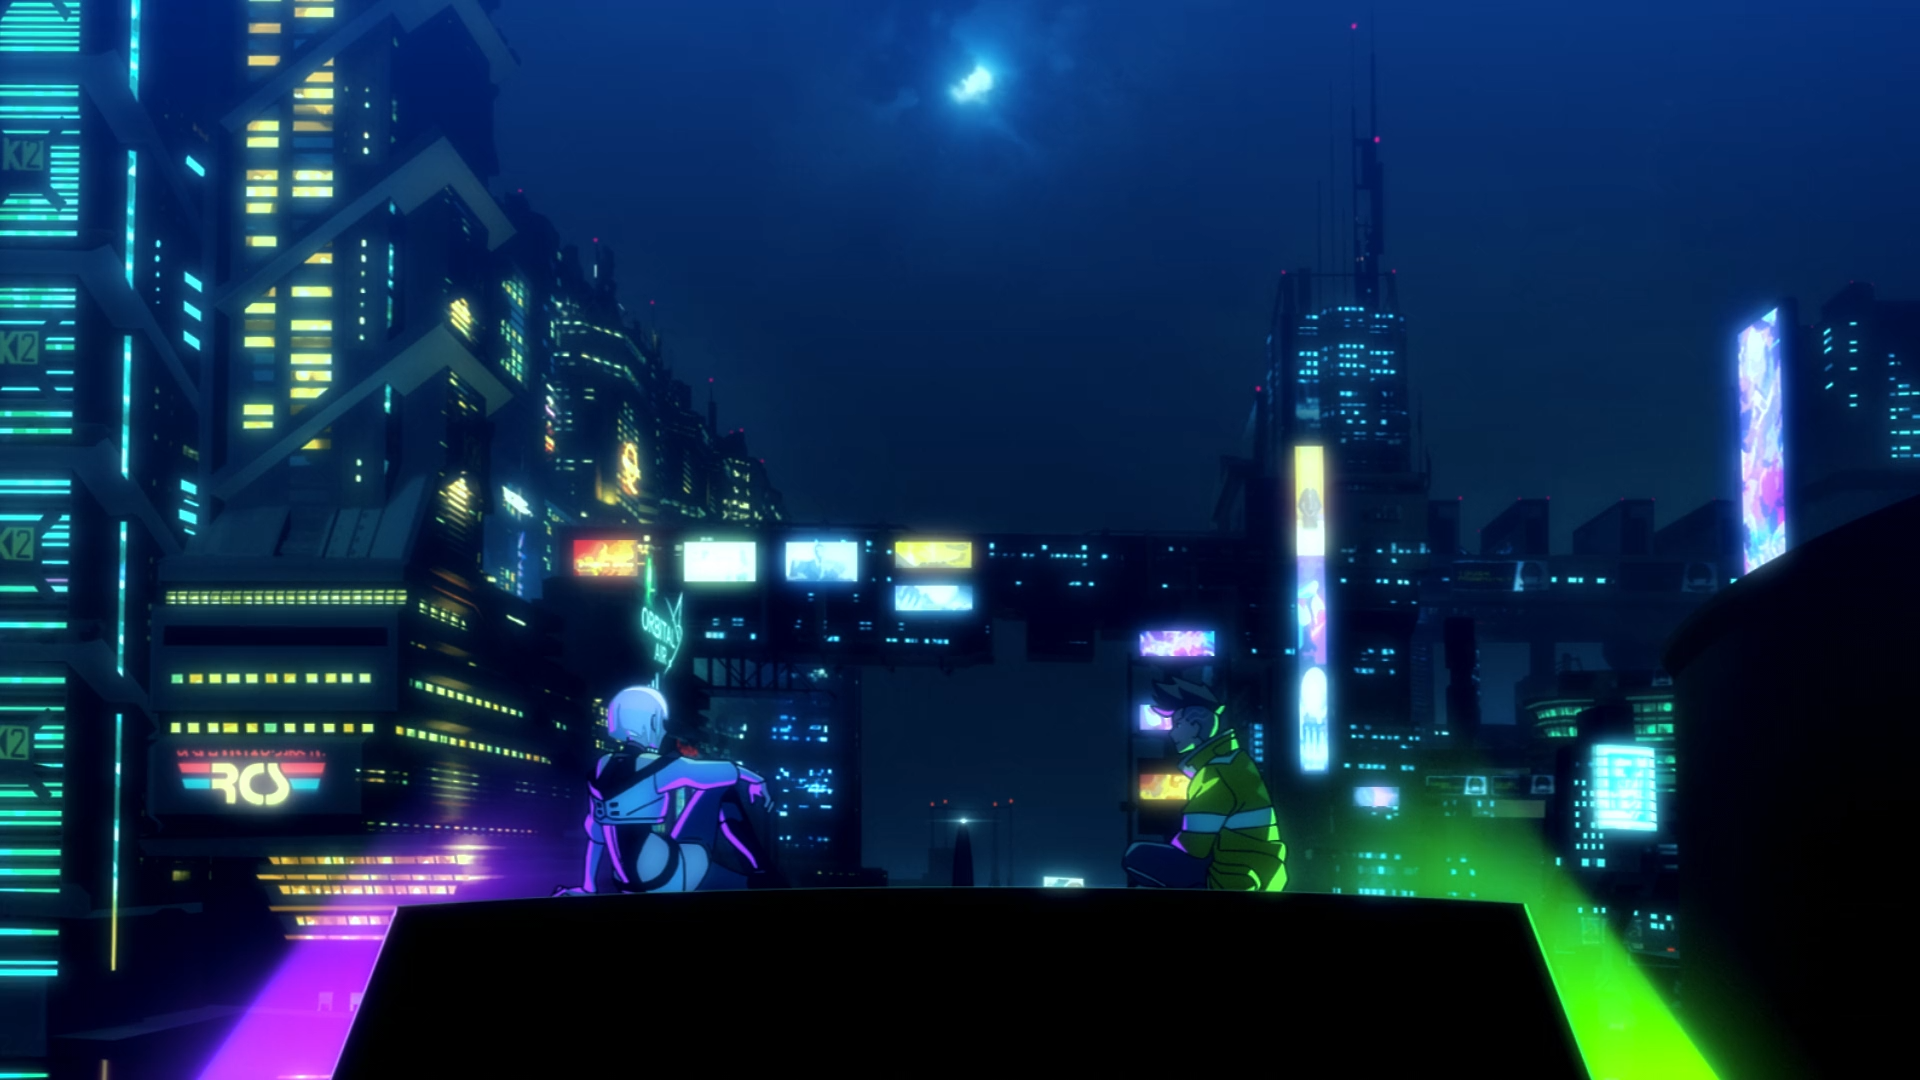 Anime Cyberpunk: Edgerunners 4k Ultra HD Wallpaper